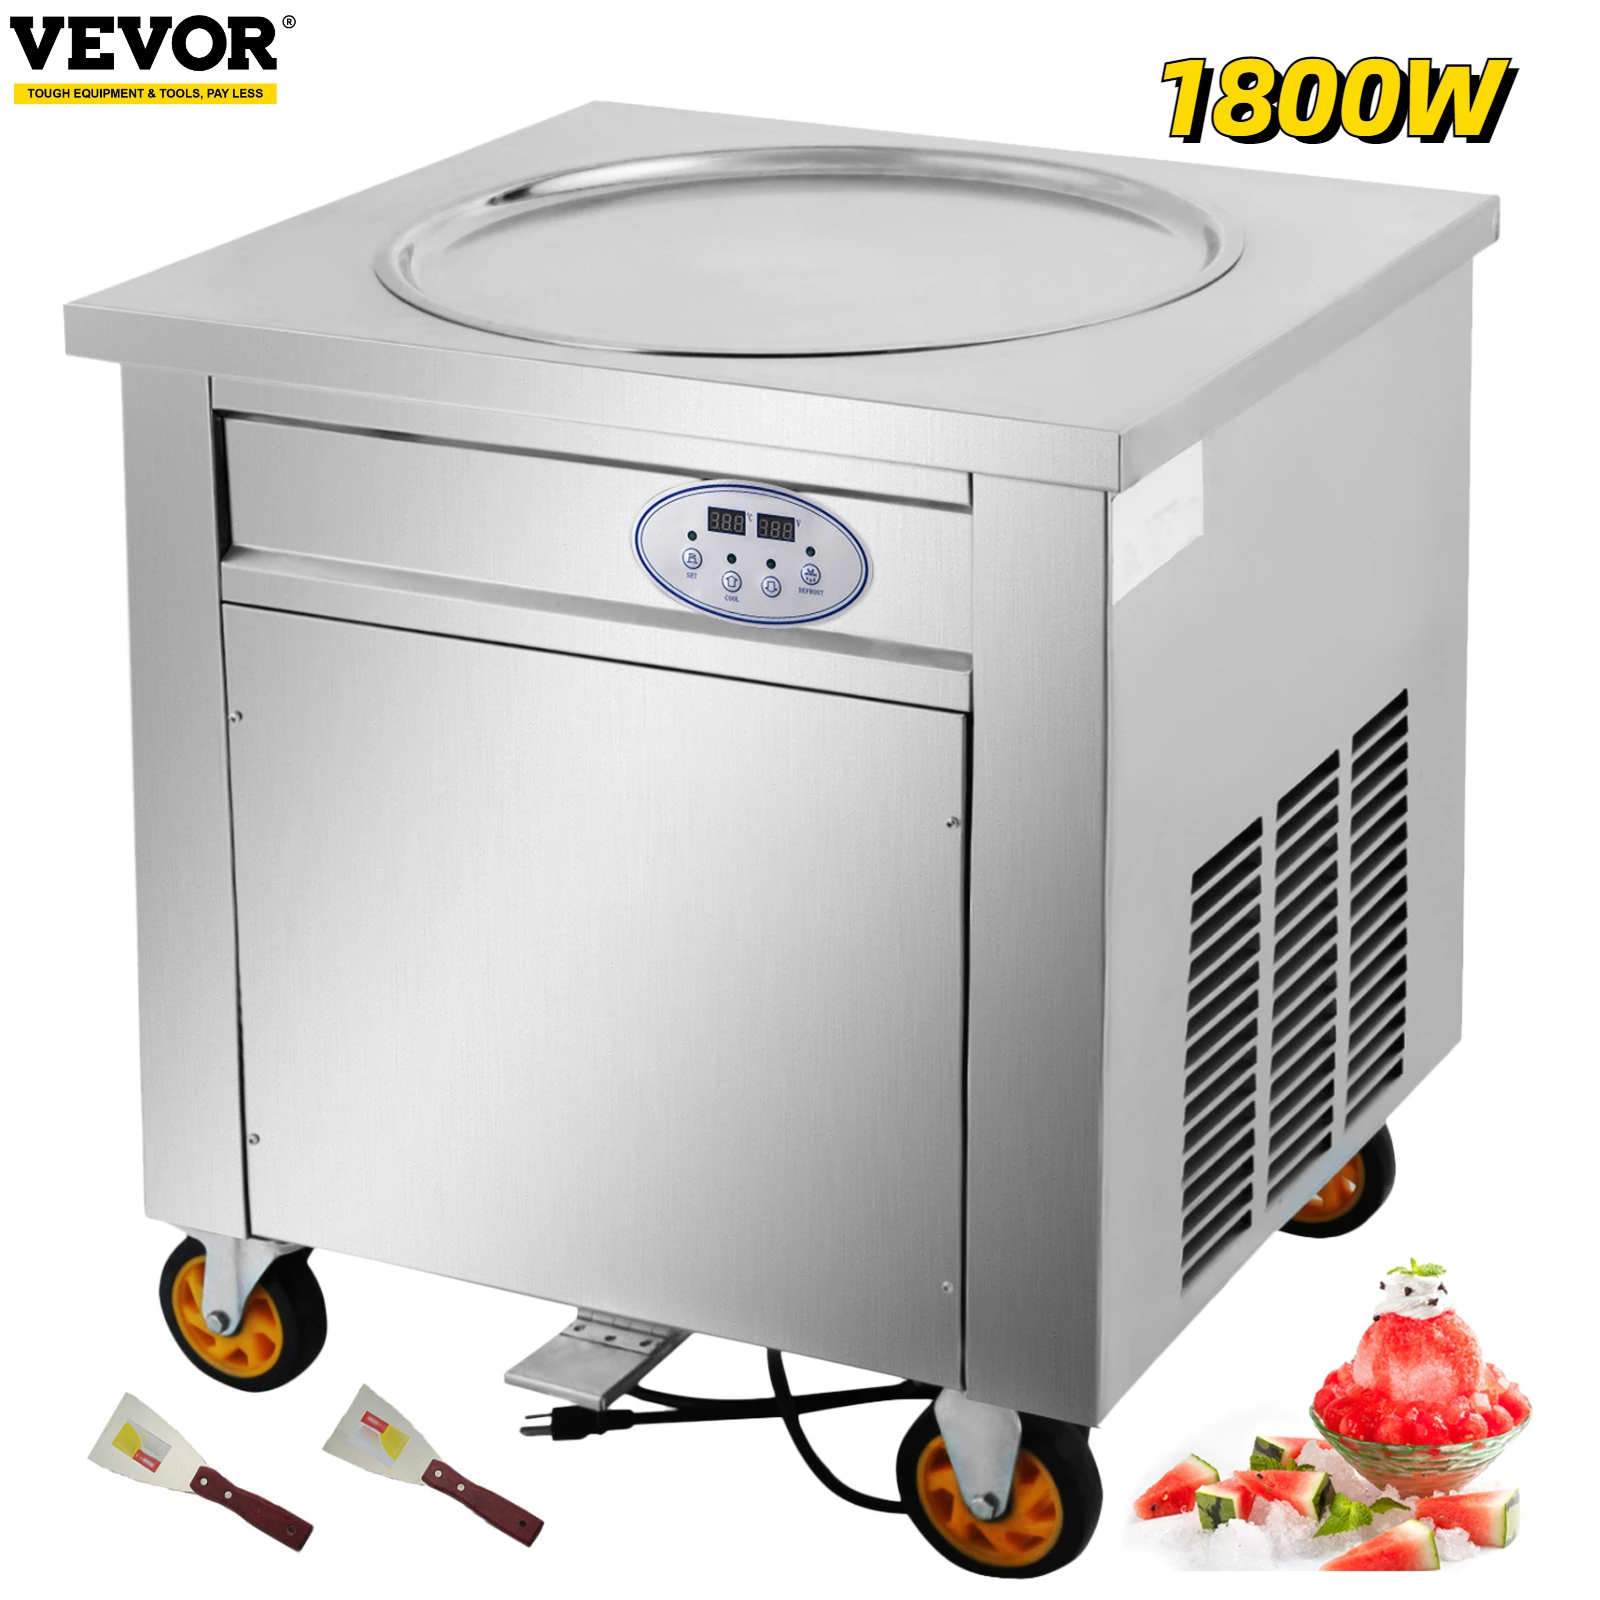 VEVOR Commercial Fried Ice Cream Machine 50cm Single Pan 1800W Stainless Steel Temperature Control Home Ice Cream Porridge Maker